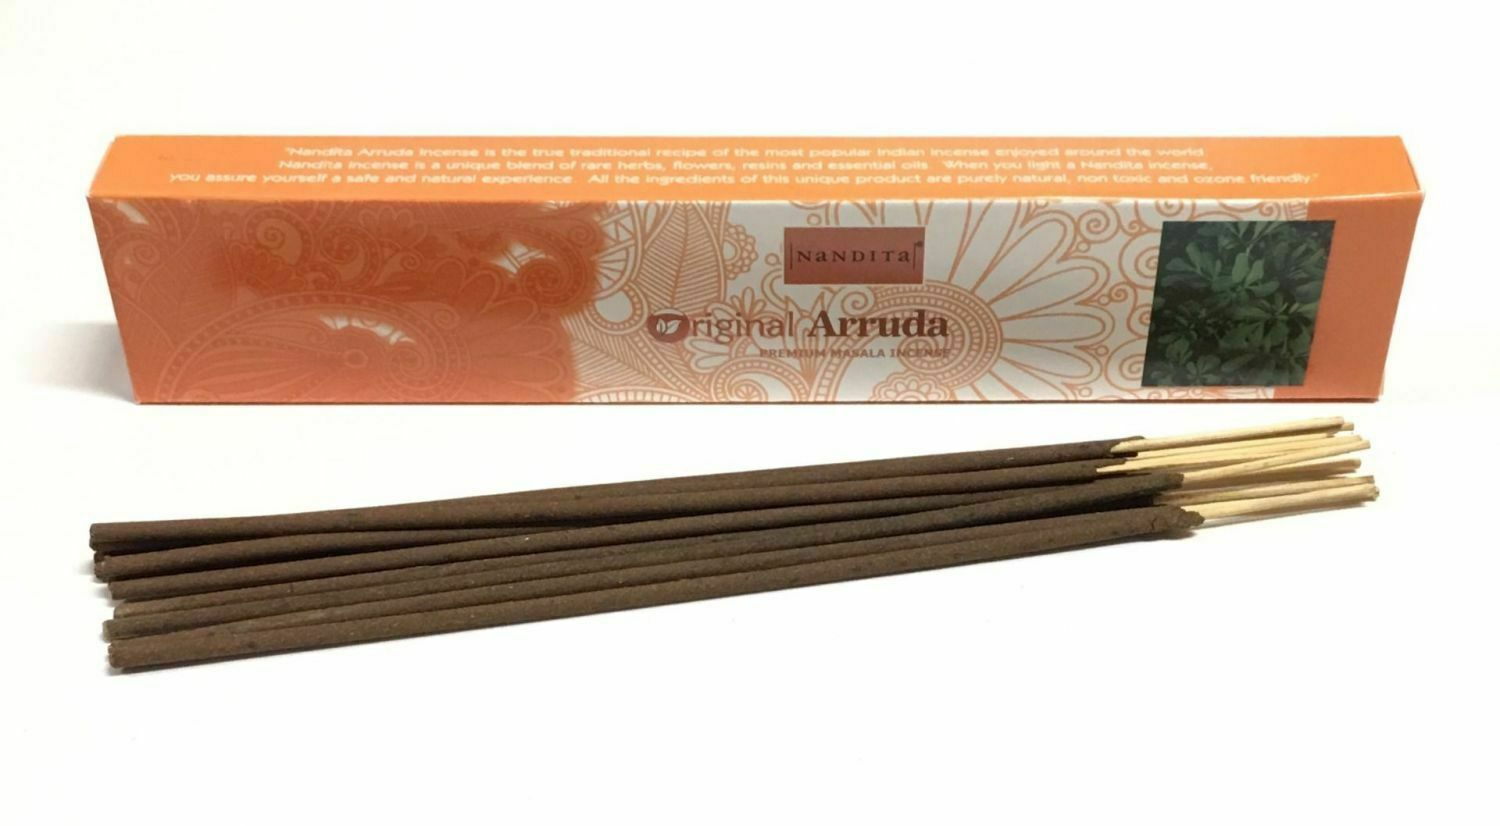 ORIGINAL ARRUDA Premium Masala Incense, Nandita (ОРИДЖИНАЛ РУТА премиум благовония палочки, Нандита), 15 г.